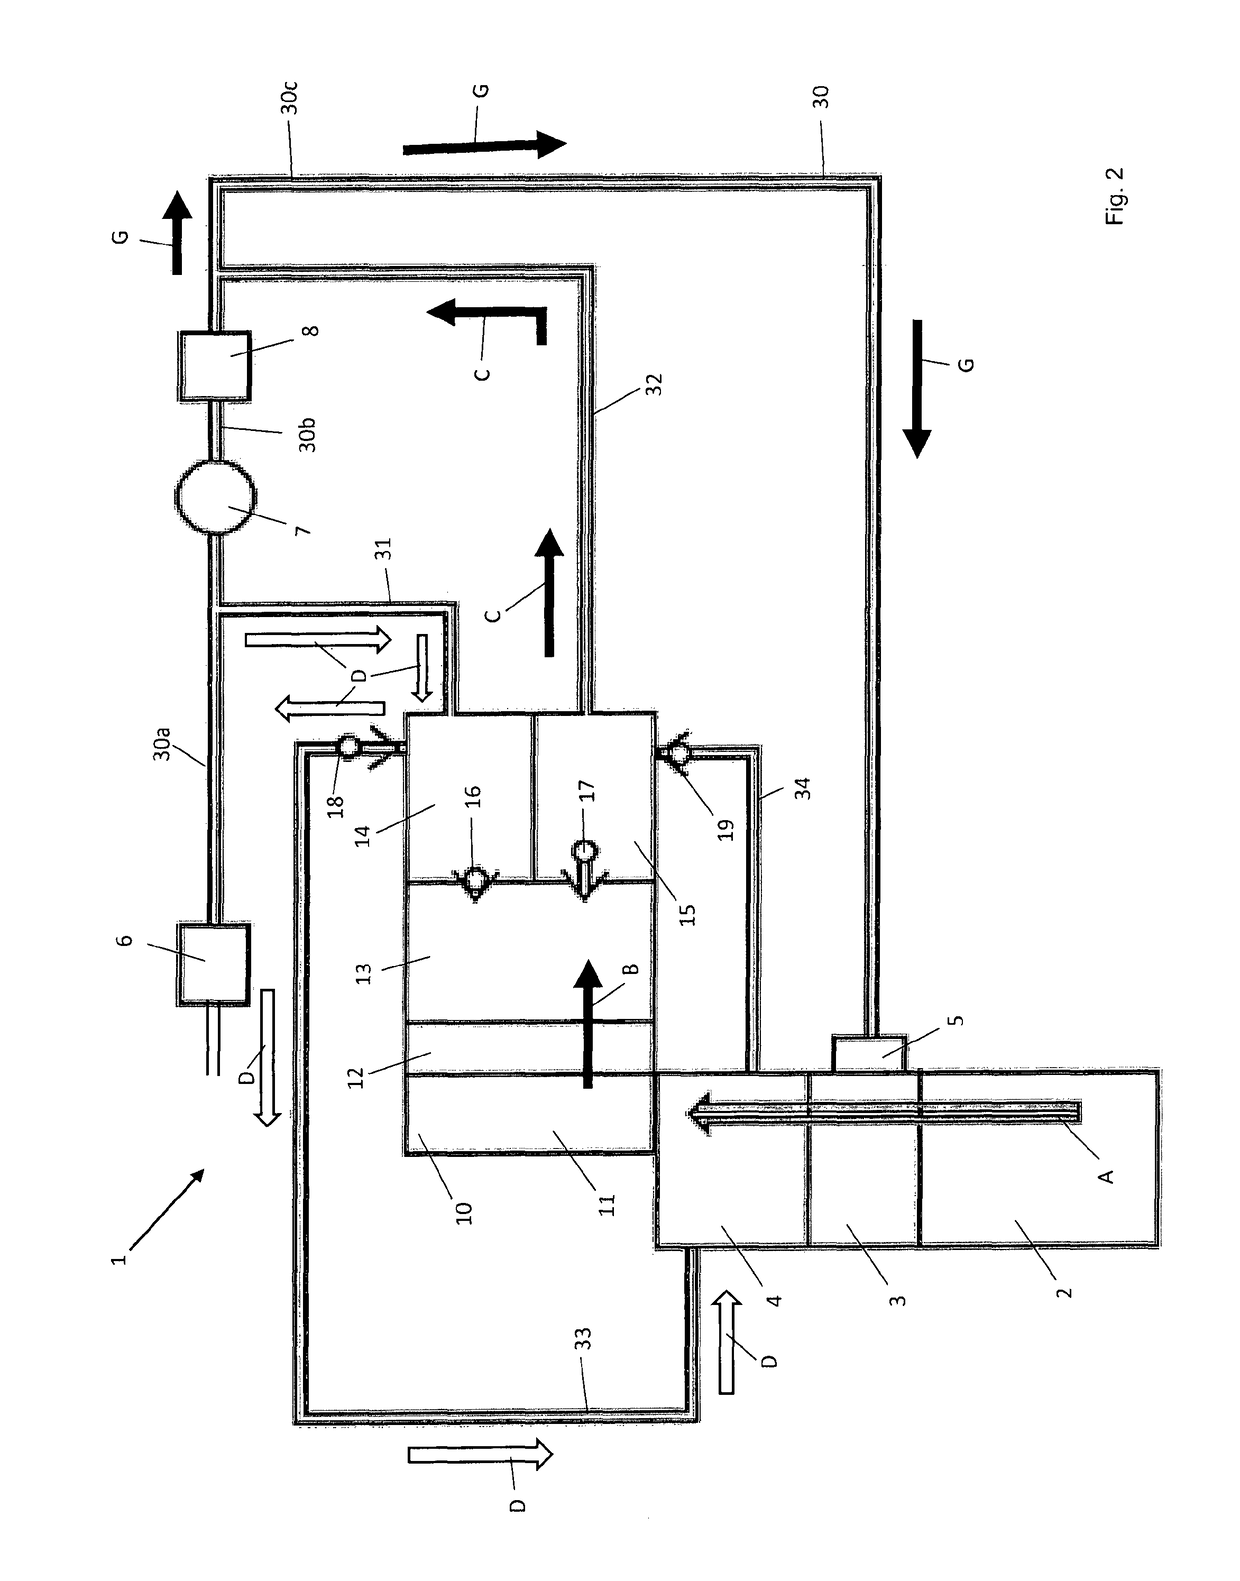 Ventilation system for an internal combustion engine